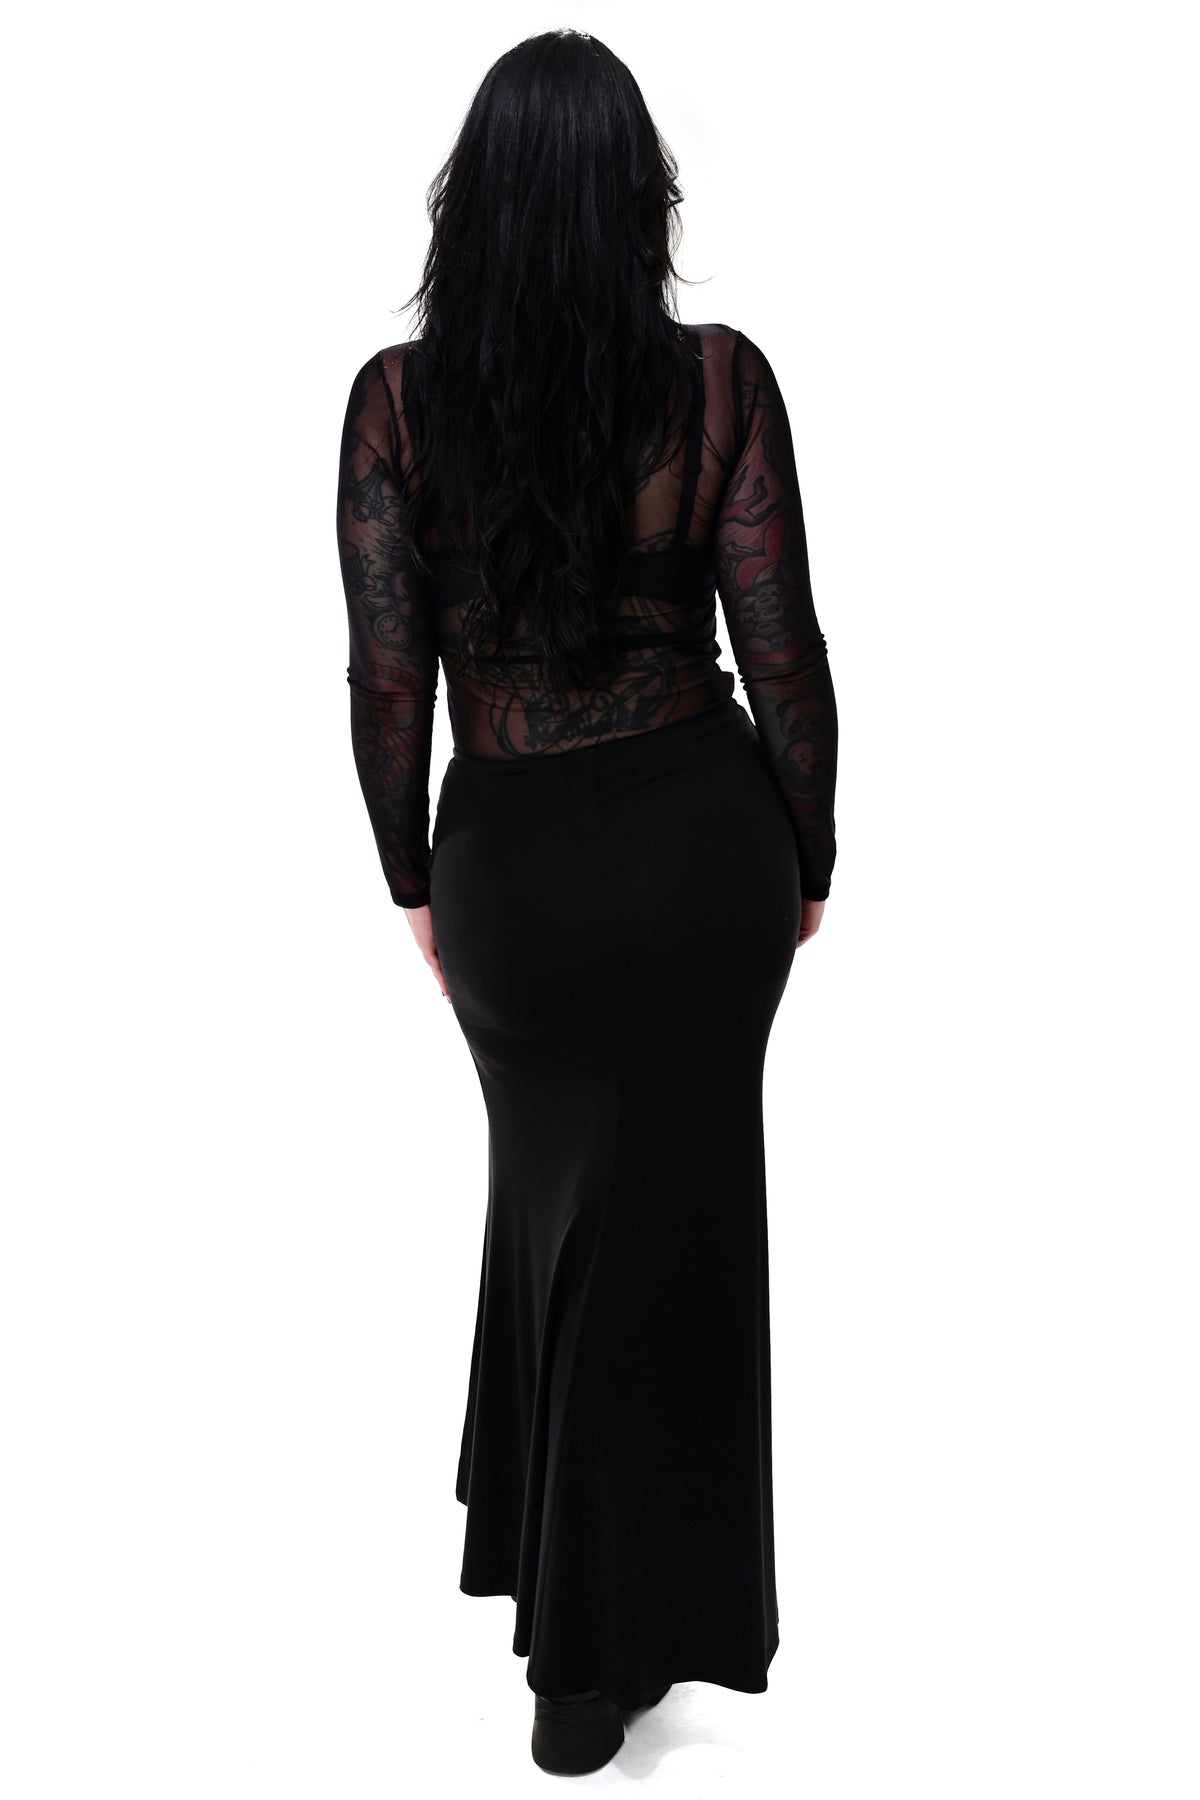 black maxi skirt with asymmetrical waistline, side slit and slight mermaid flare